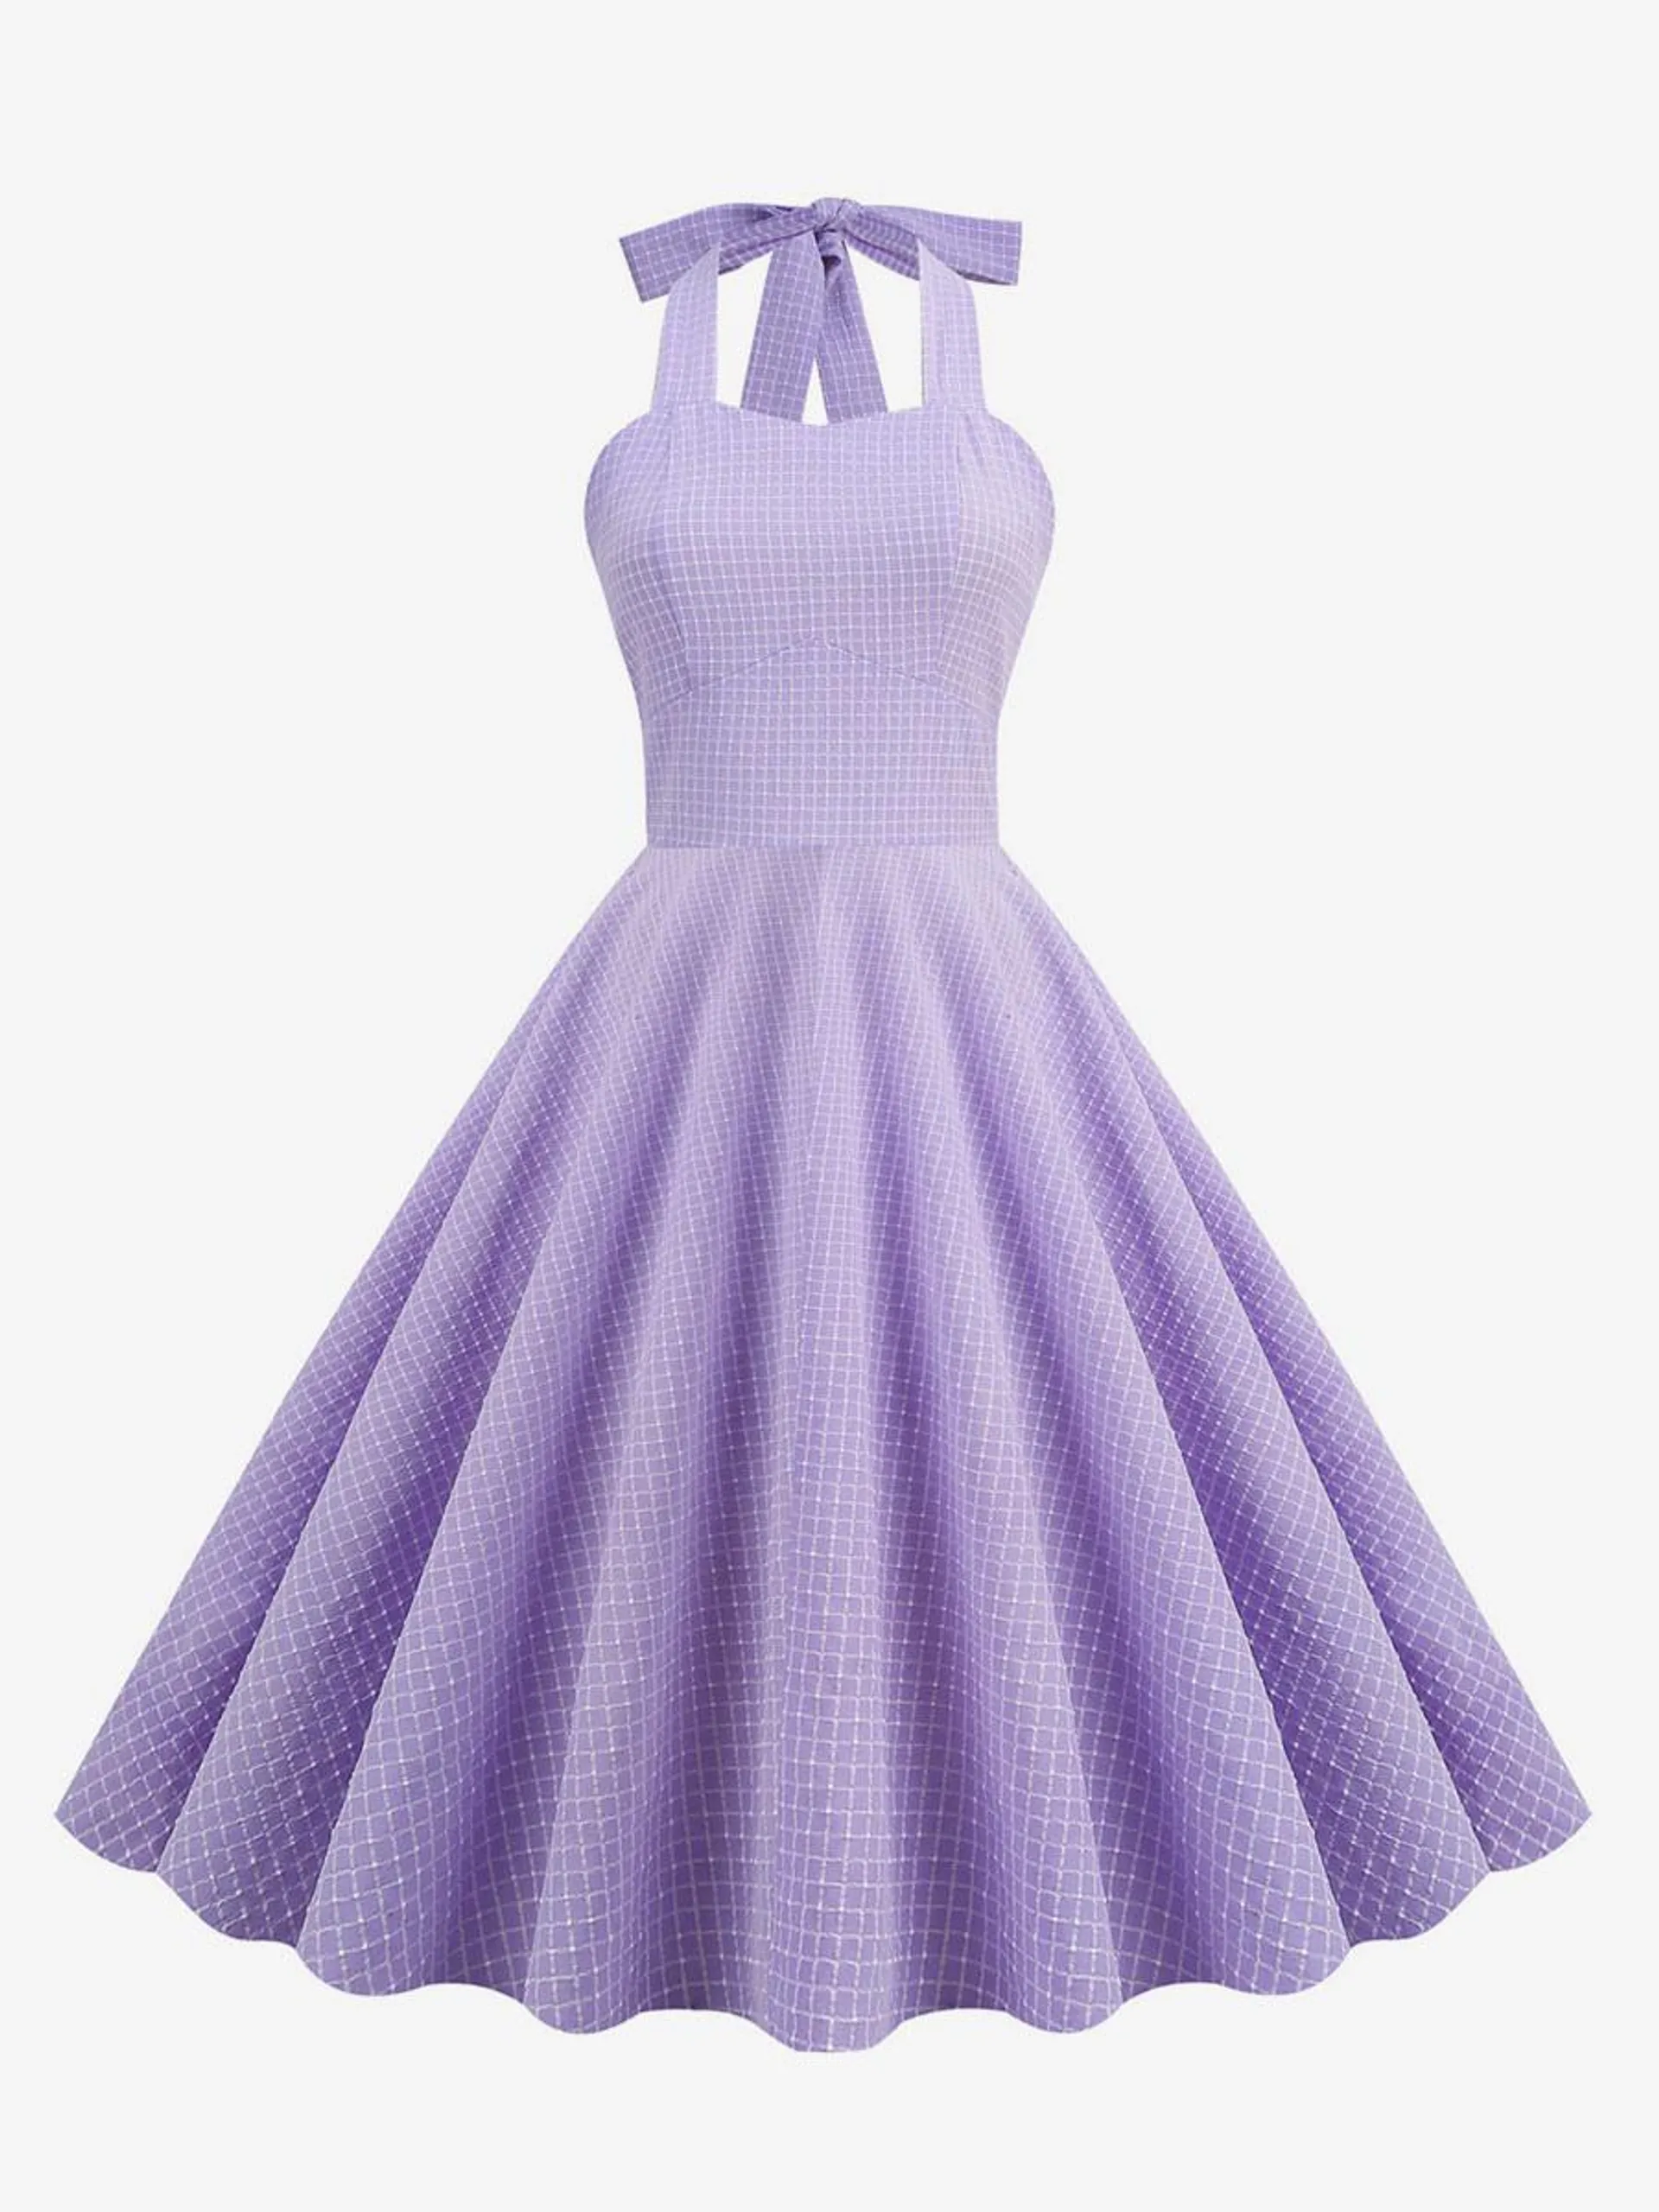 Vintage Dress 1950s Audrey Hepburn Style Pink Plaid Pleated Sleeveless Sweetheart Neck Medium Swing Dress